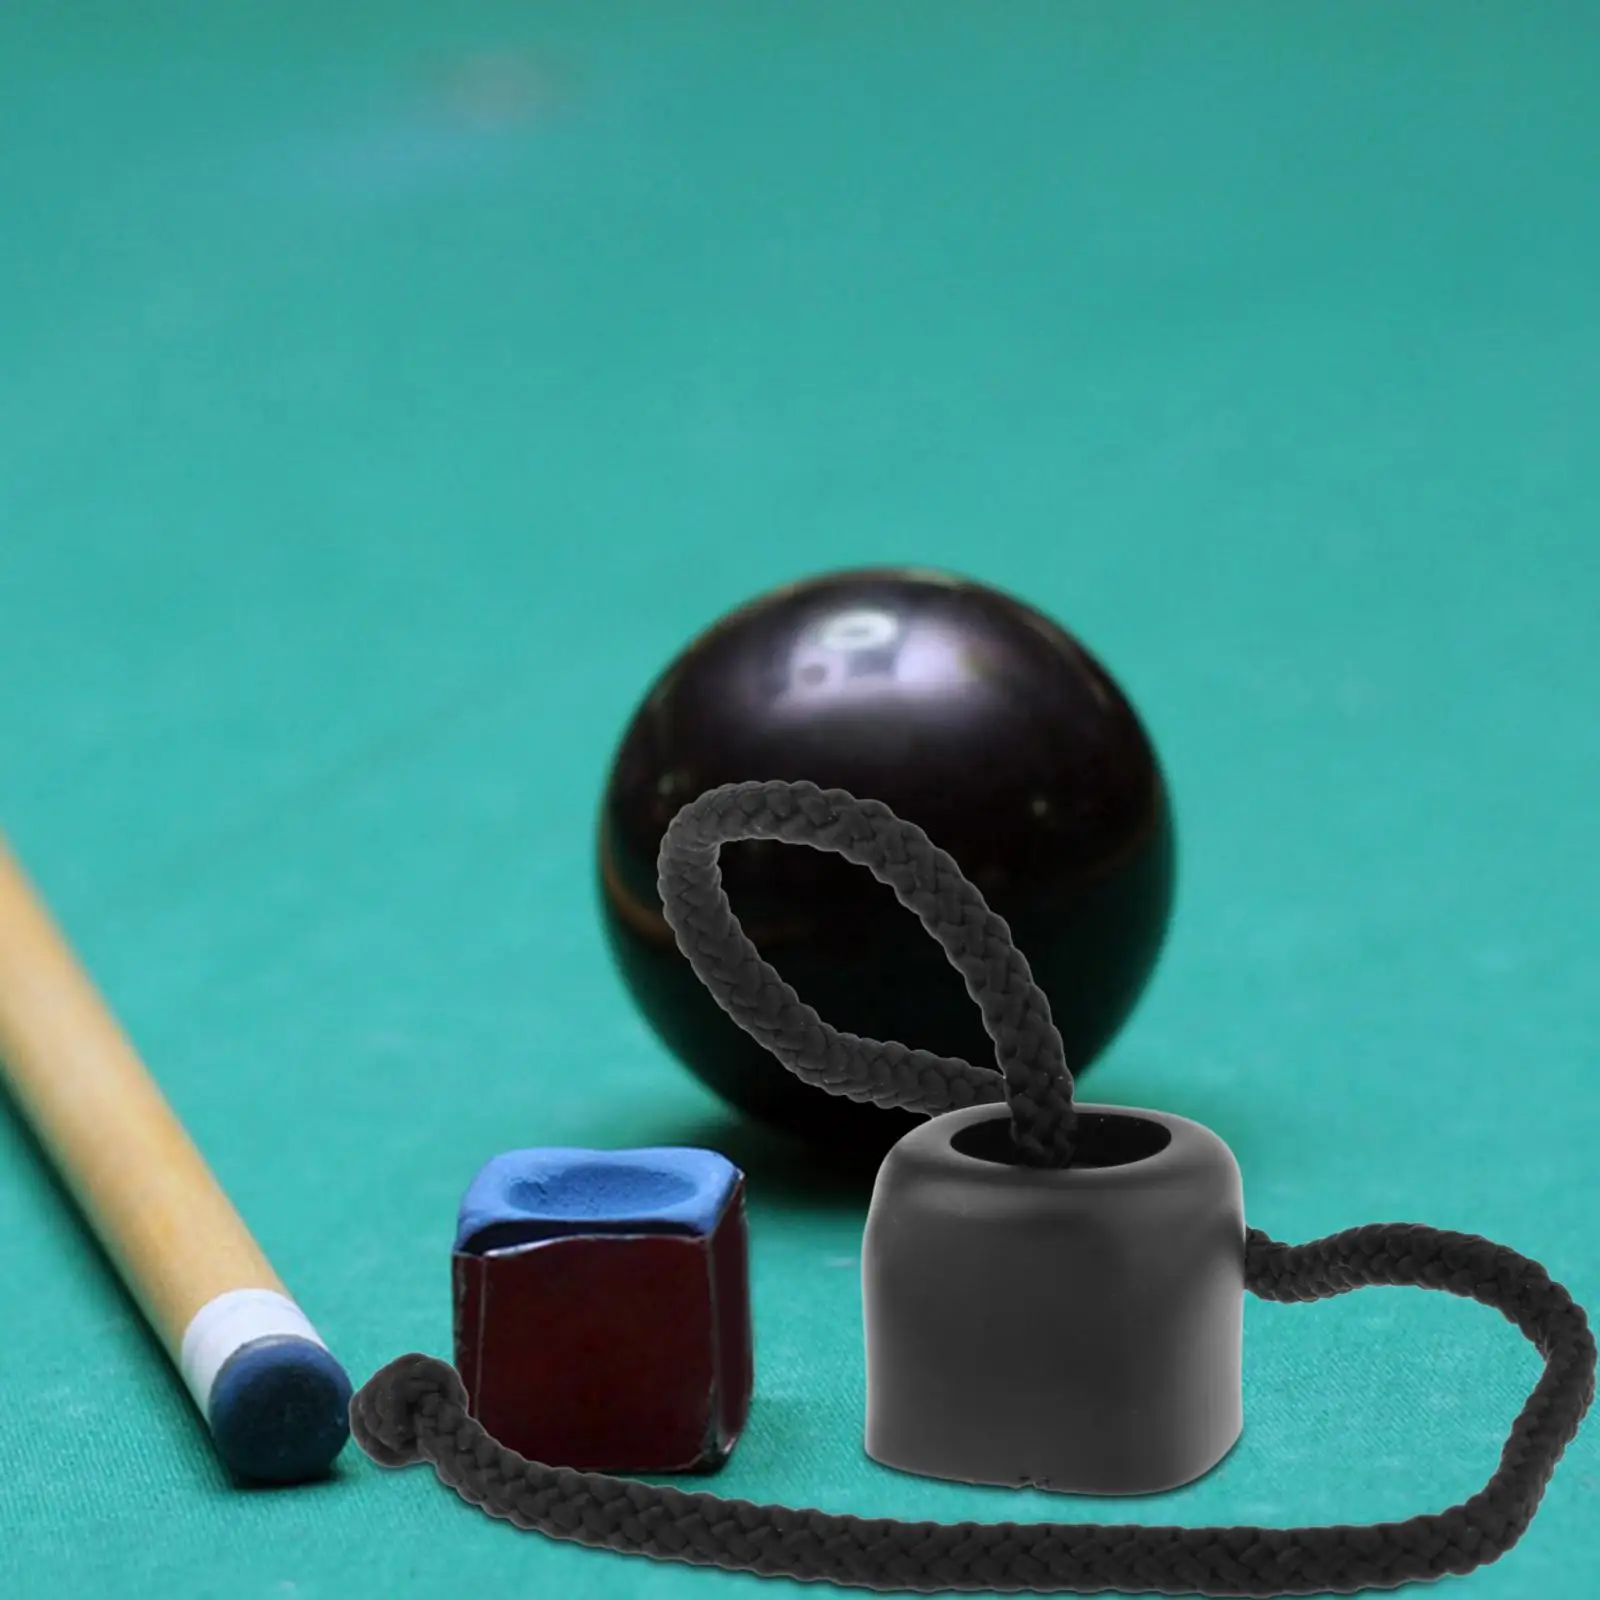 Square Pool Chalk Holder, Billiards Chalk Holder ,Portable Pool Snooker Chalk Holder, High Performance ,Premium ,Durable